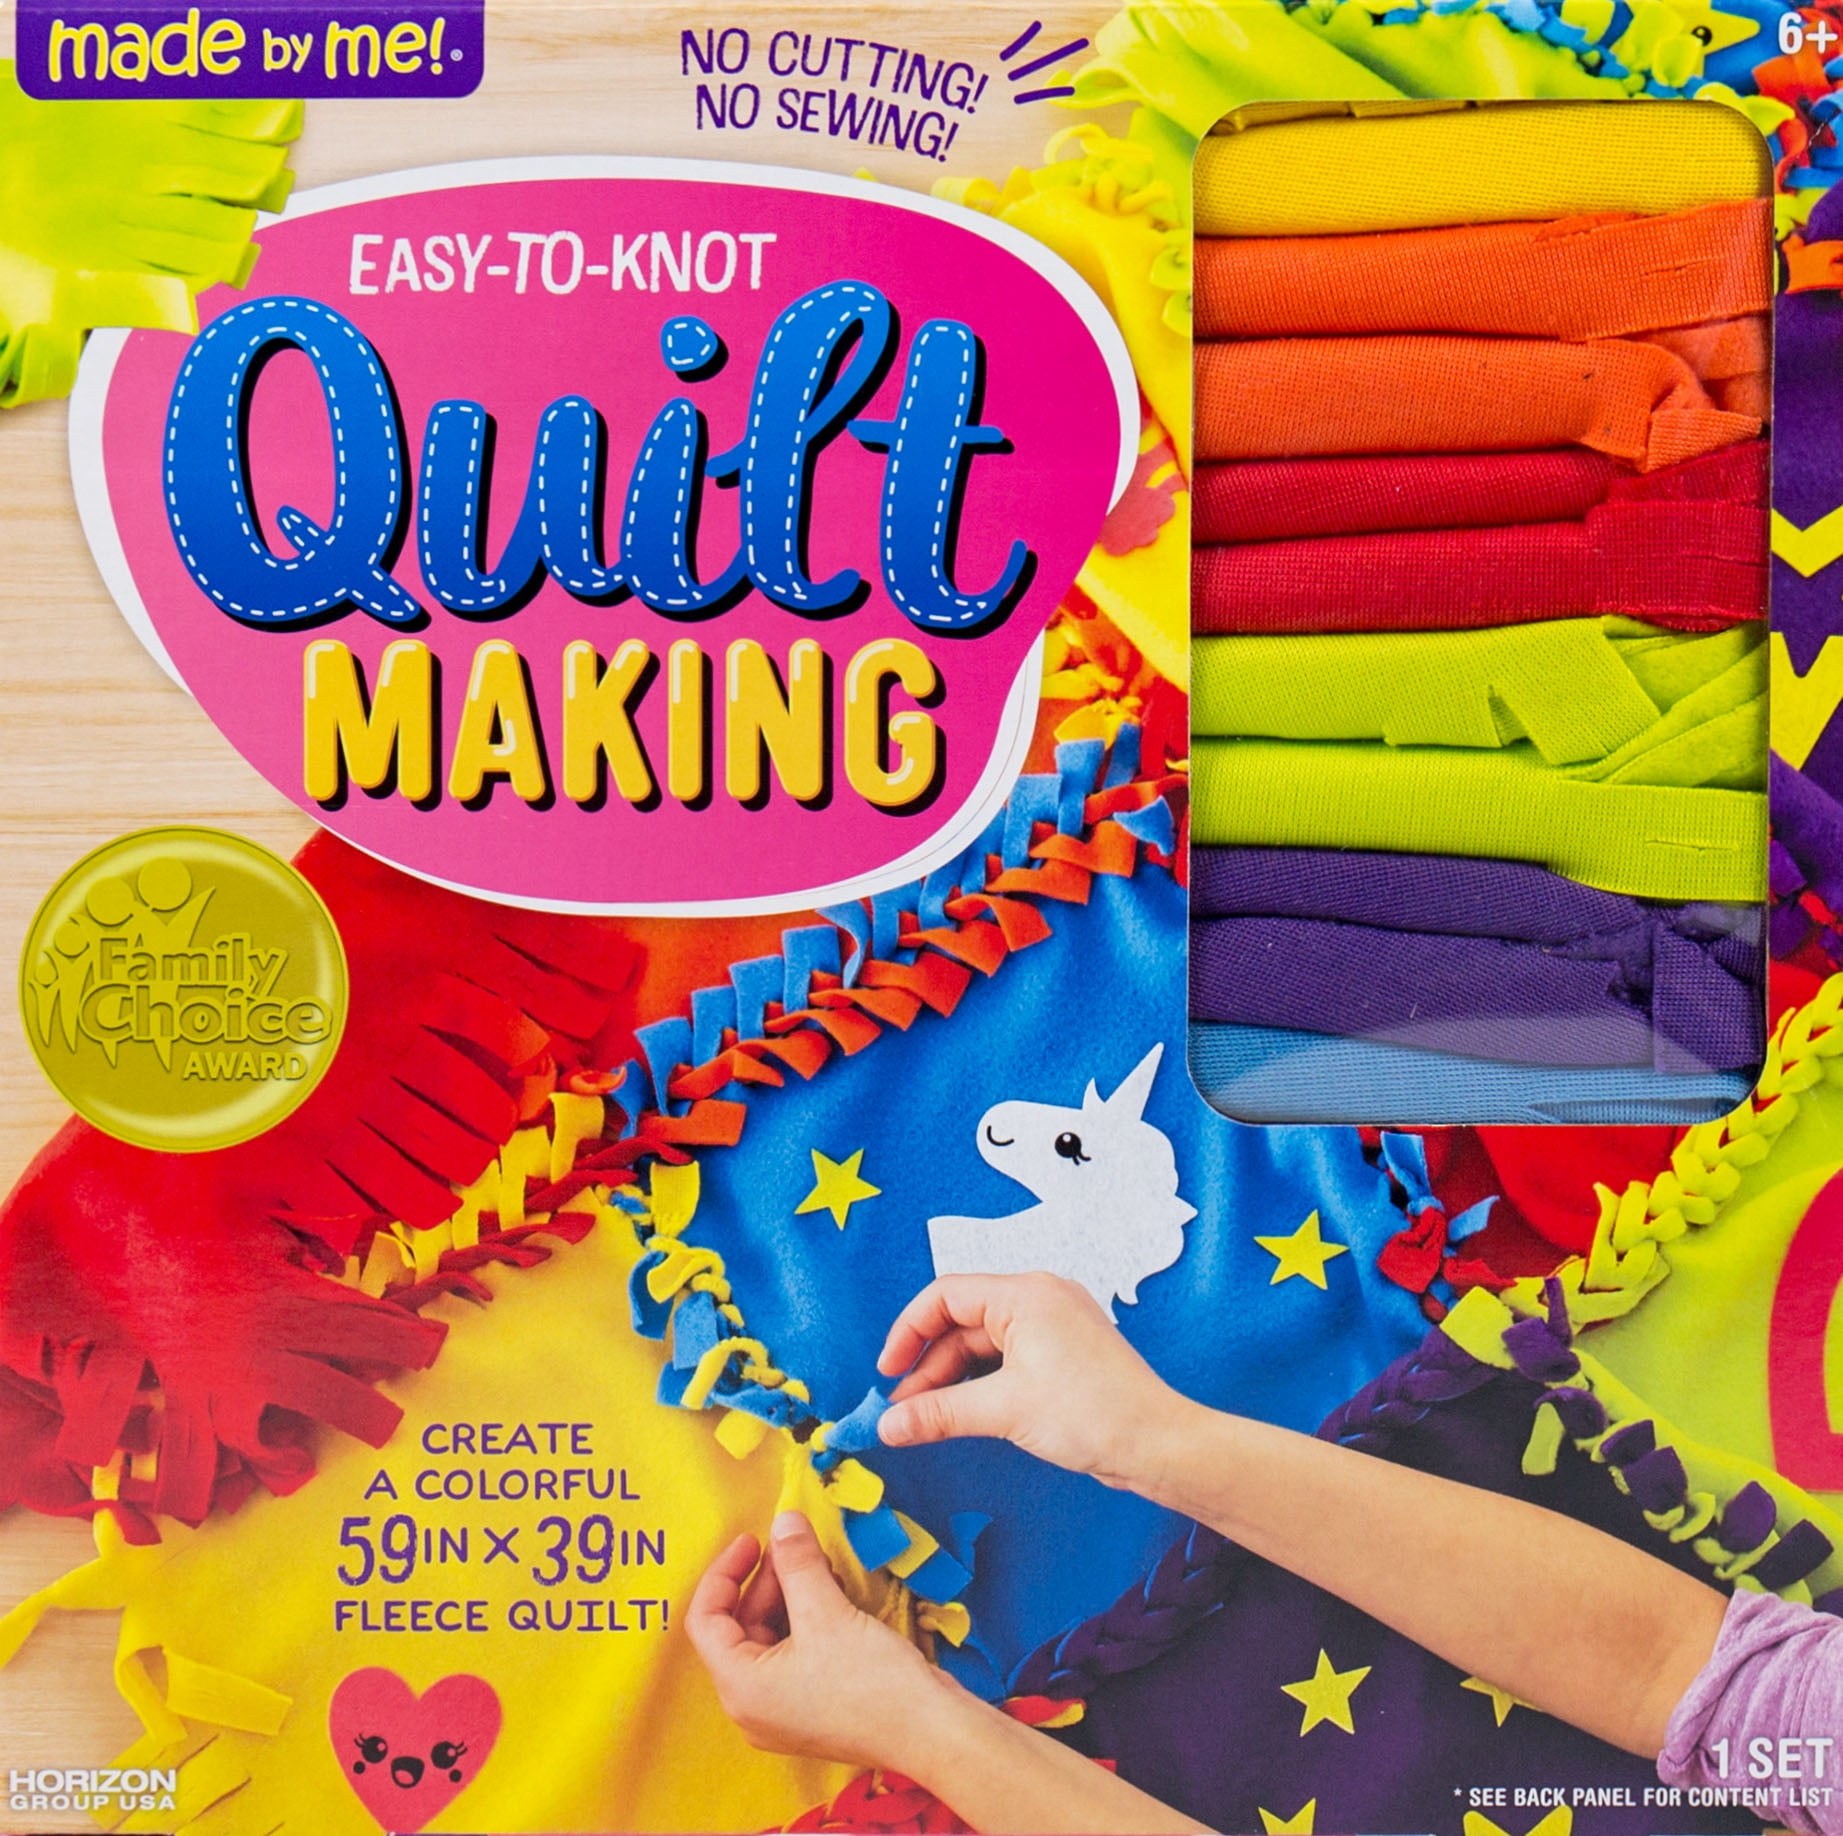 keusn fashion designer kits for girls sewing kit for kids fashion design  sketchbook creativity diy arts & crafts learning toys teen birthday gifts  multi-color 